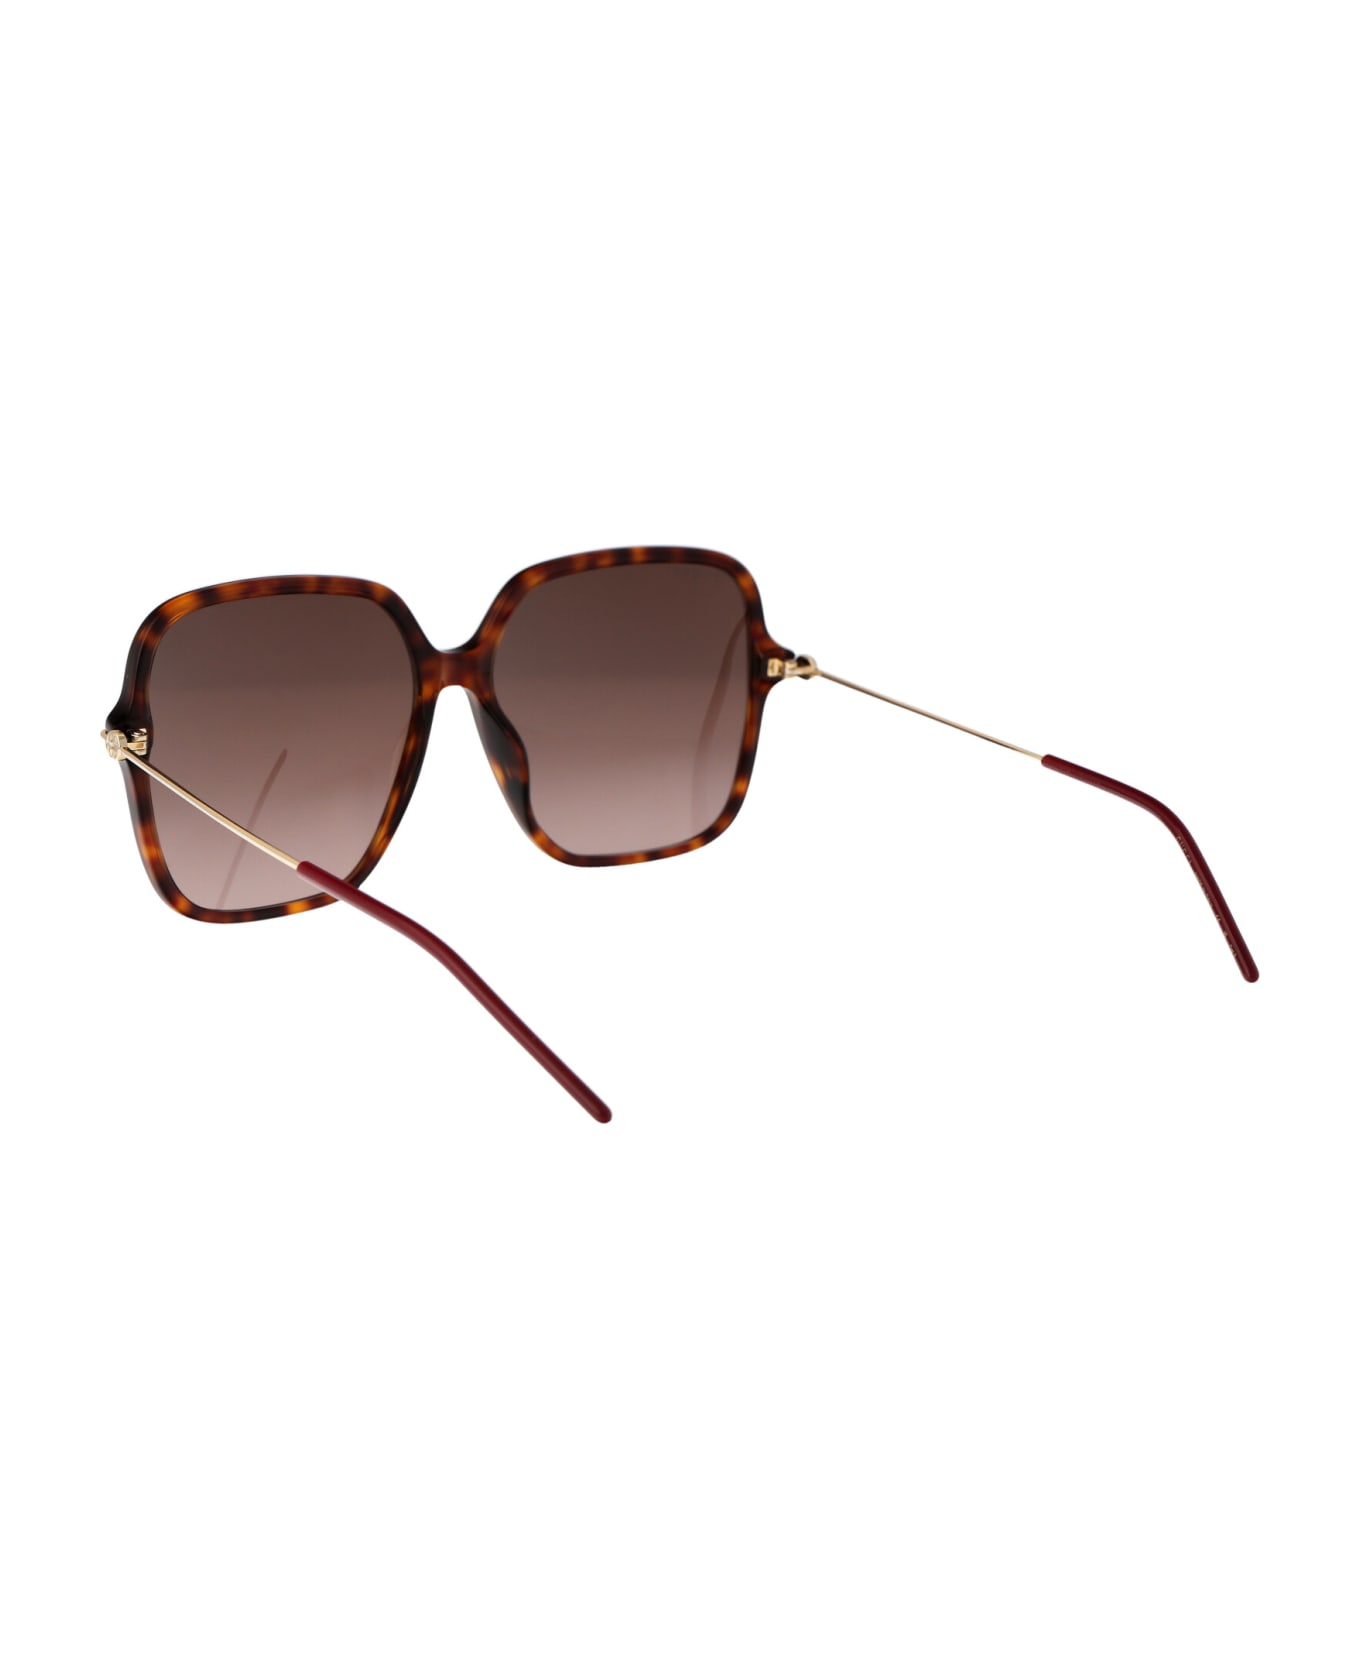 Gucci Eyewear Gg1267s Sunglasses - 002 HAVANA GOLD BROWN